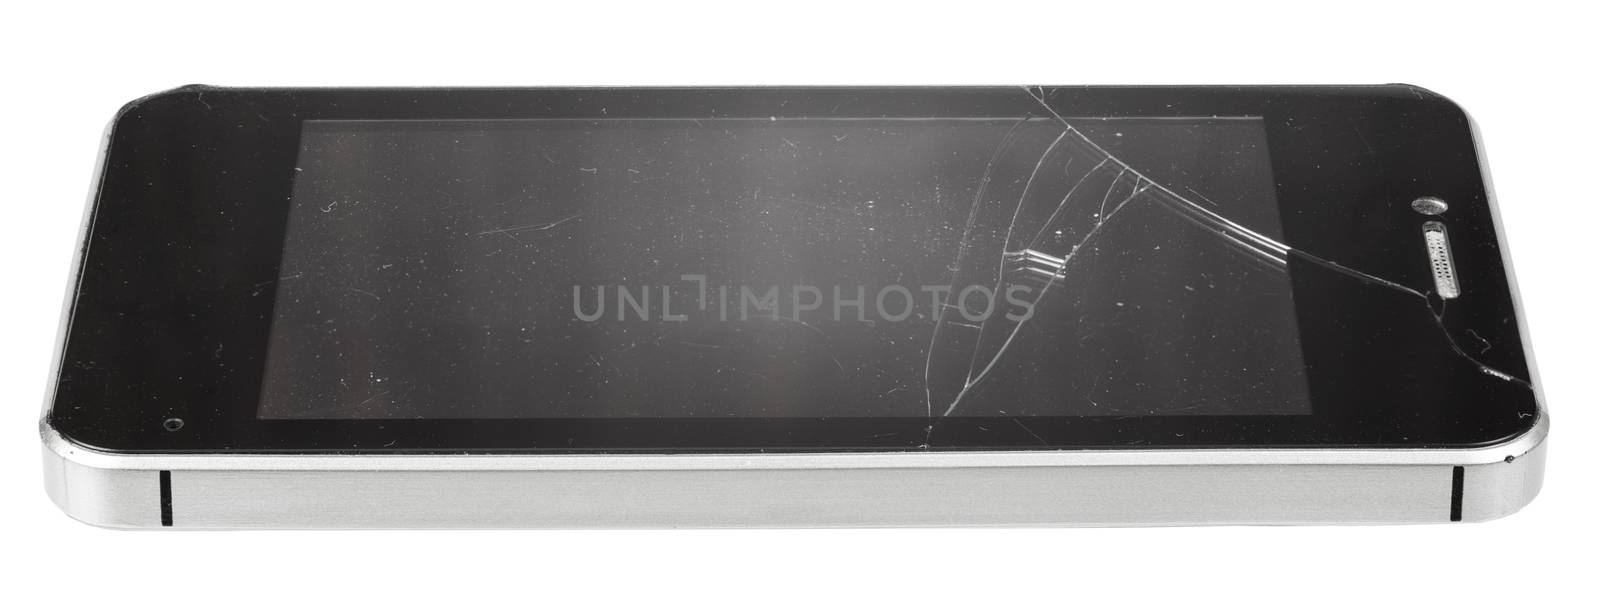 Broken smartphone by cherezoff